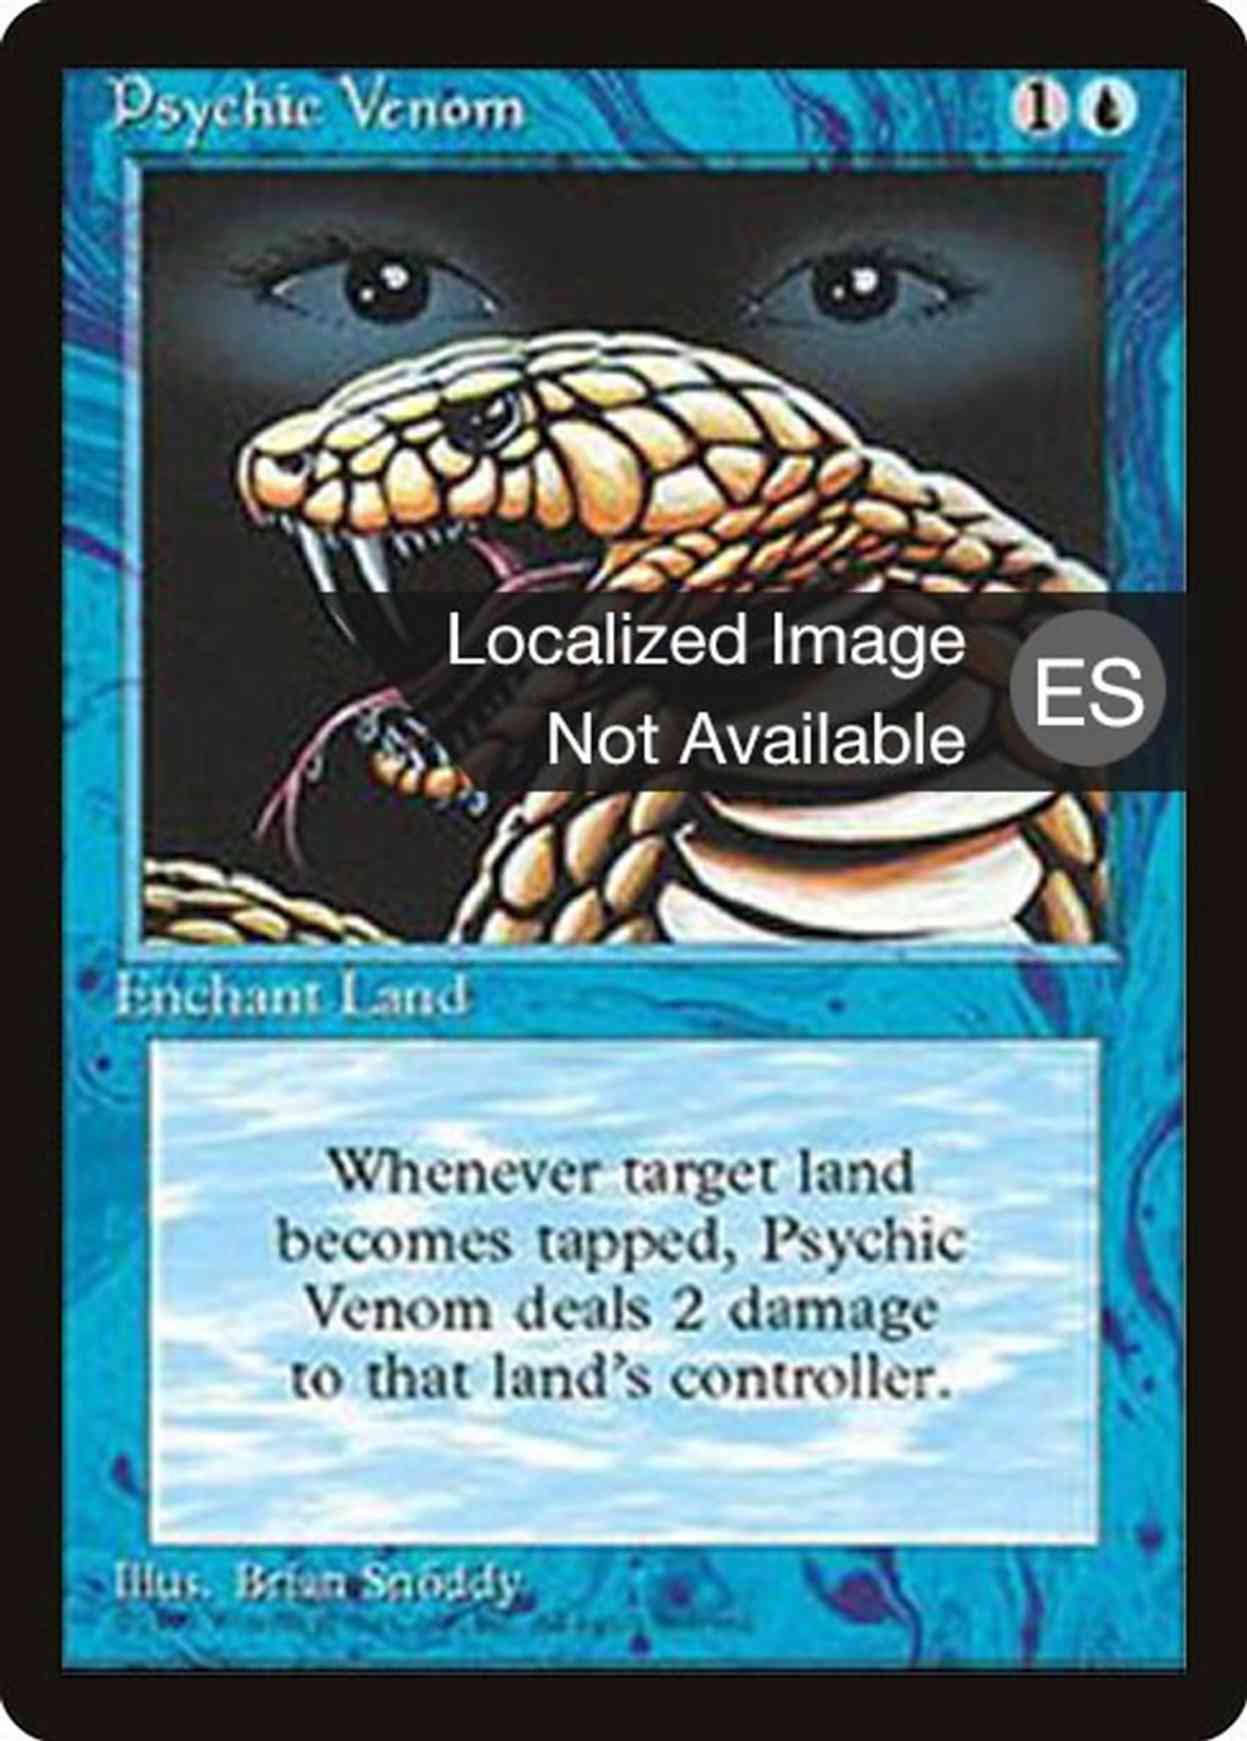 Psychic Venom magic card front